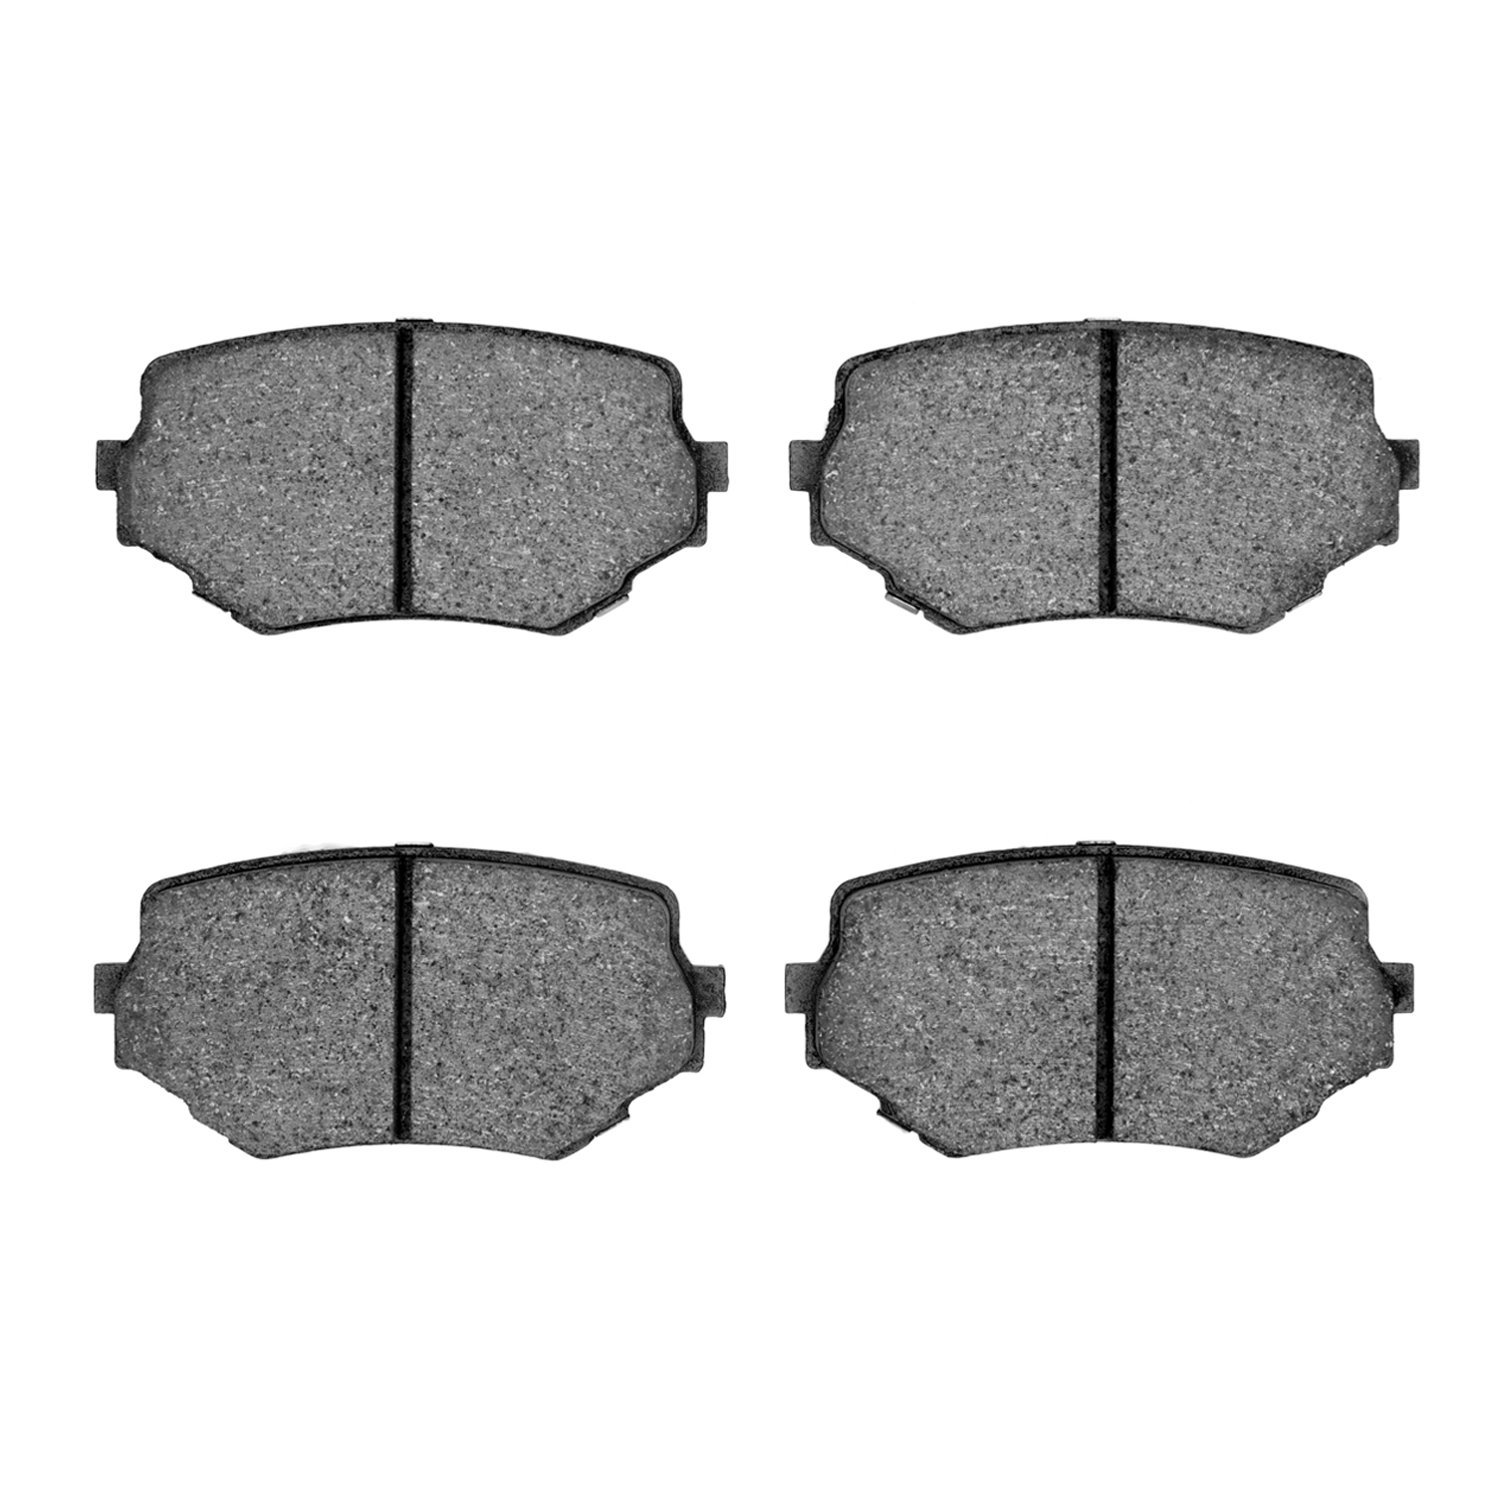 5000 Advanced Ceramic Brake Pads, 1996-2008 Multiple Makes/Models